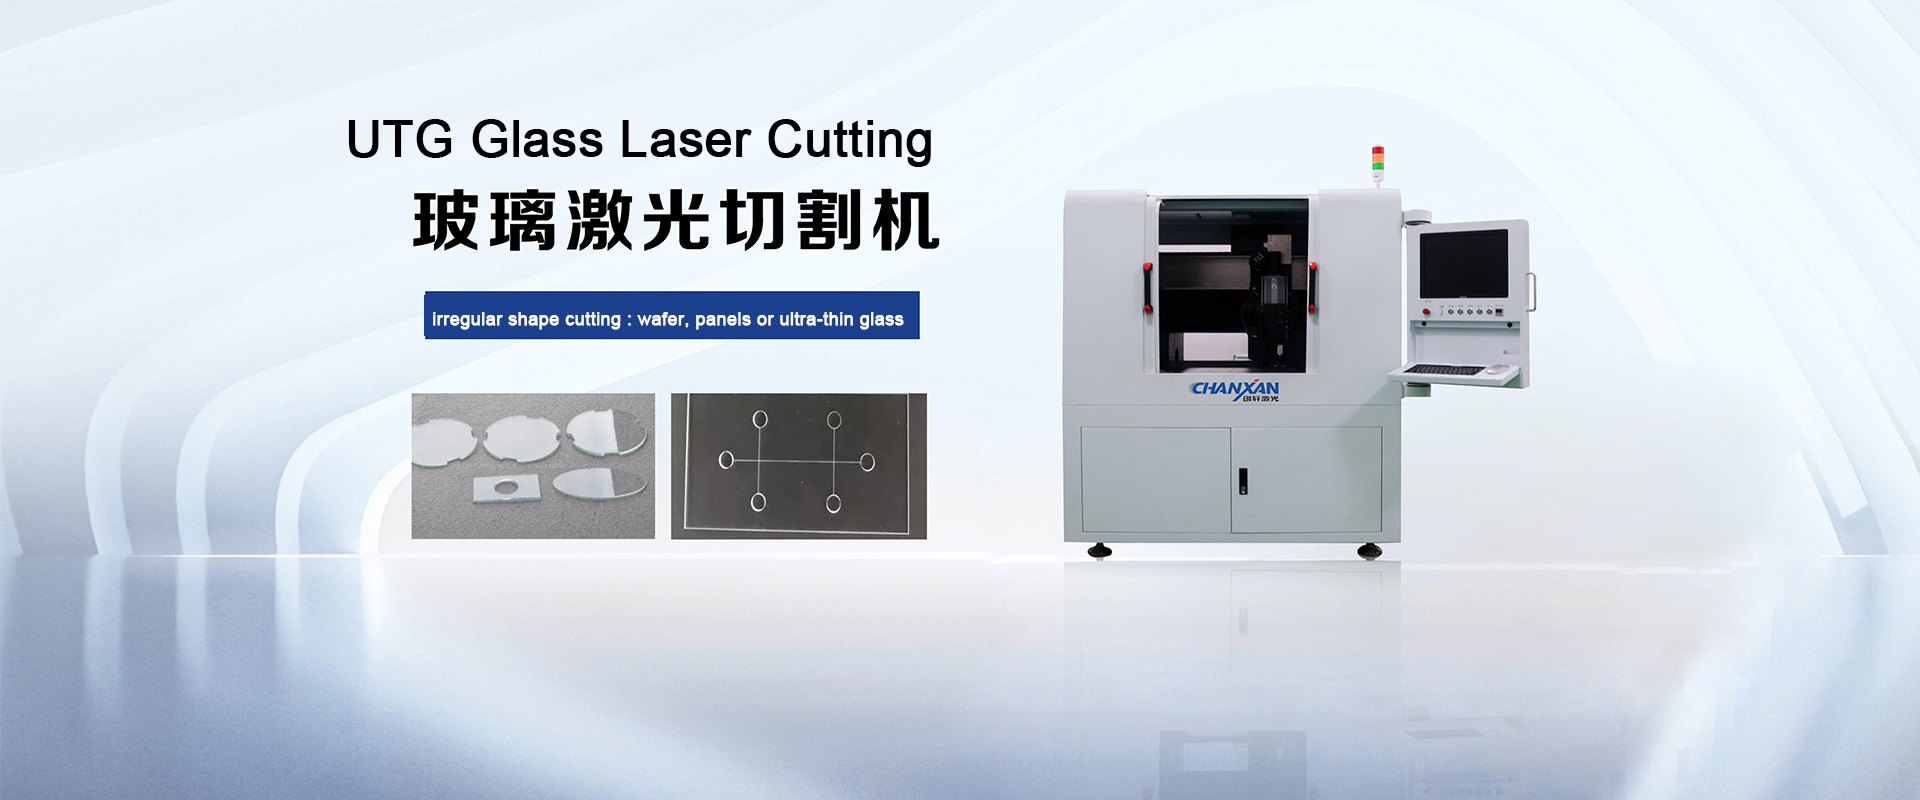 utg glass laser cutting